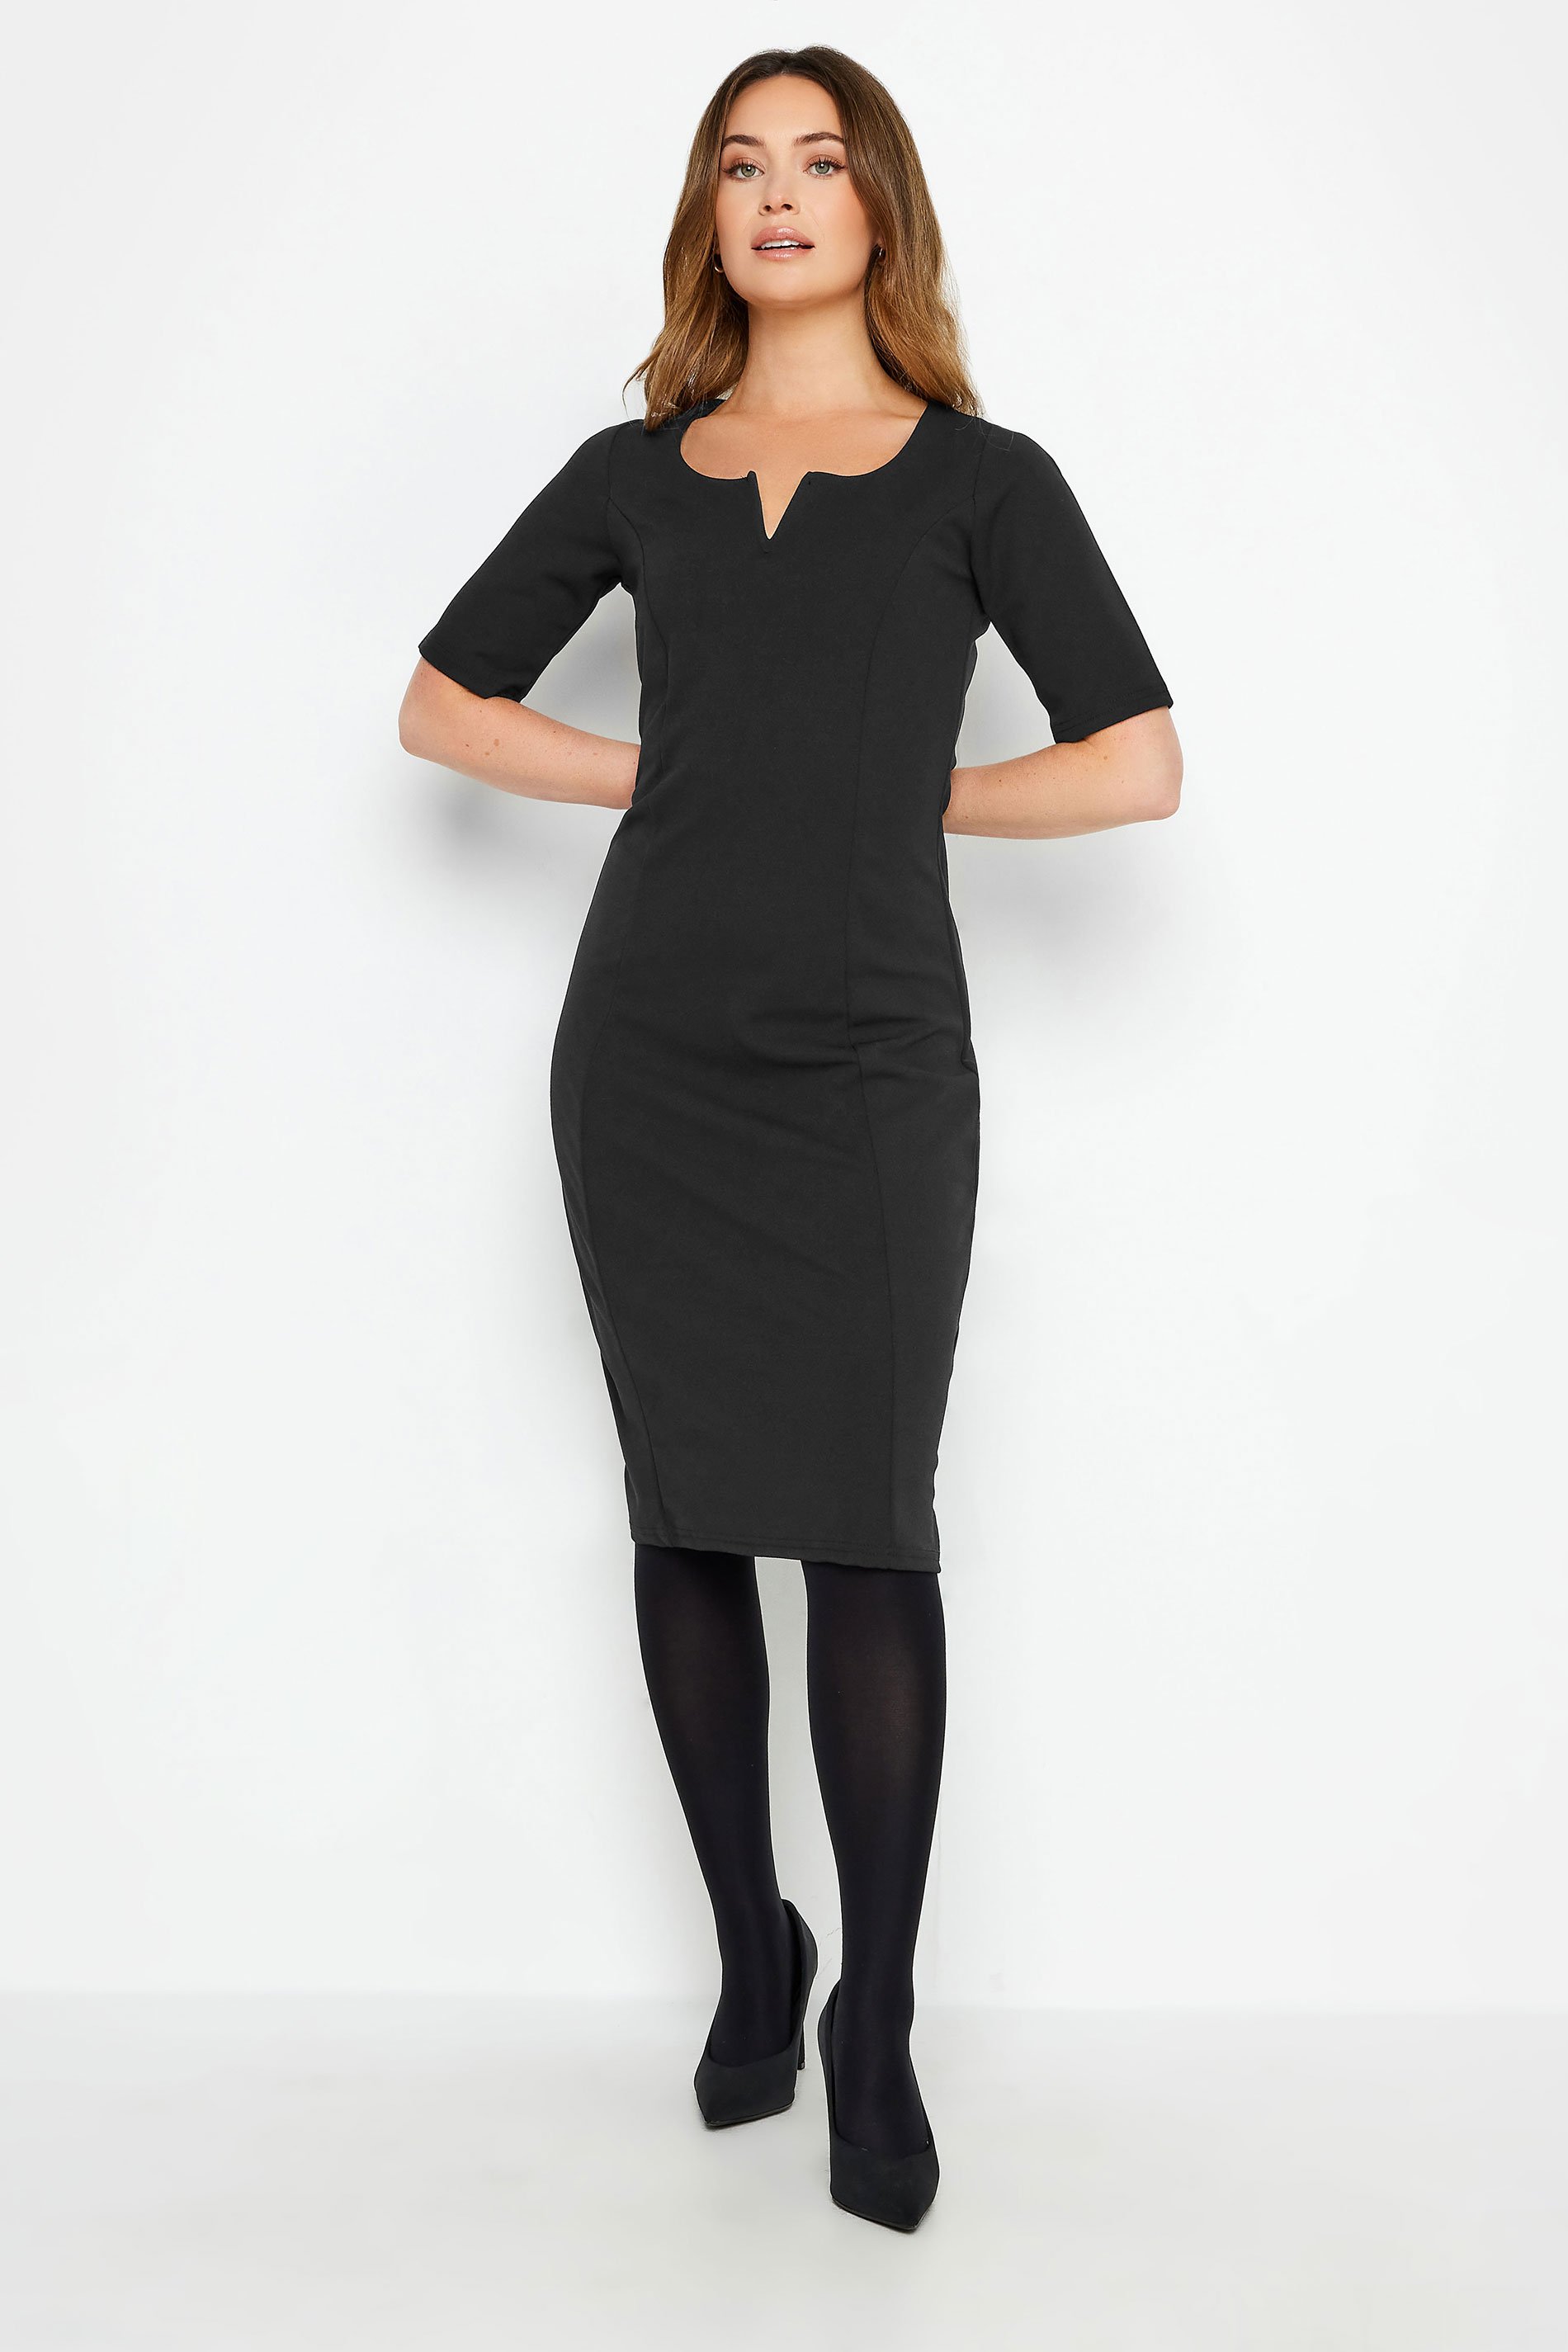 M&Co Petite Black Scuba Notch Neck Midi Dress | M&Co 1